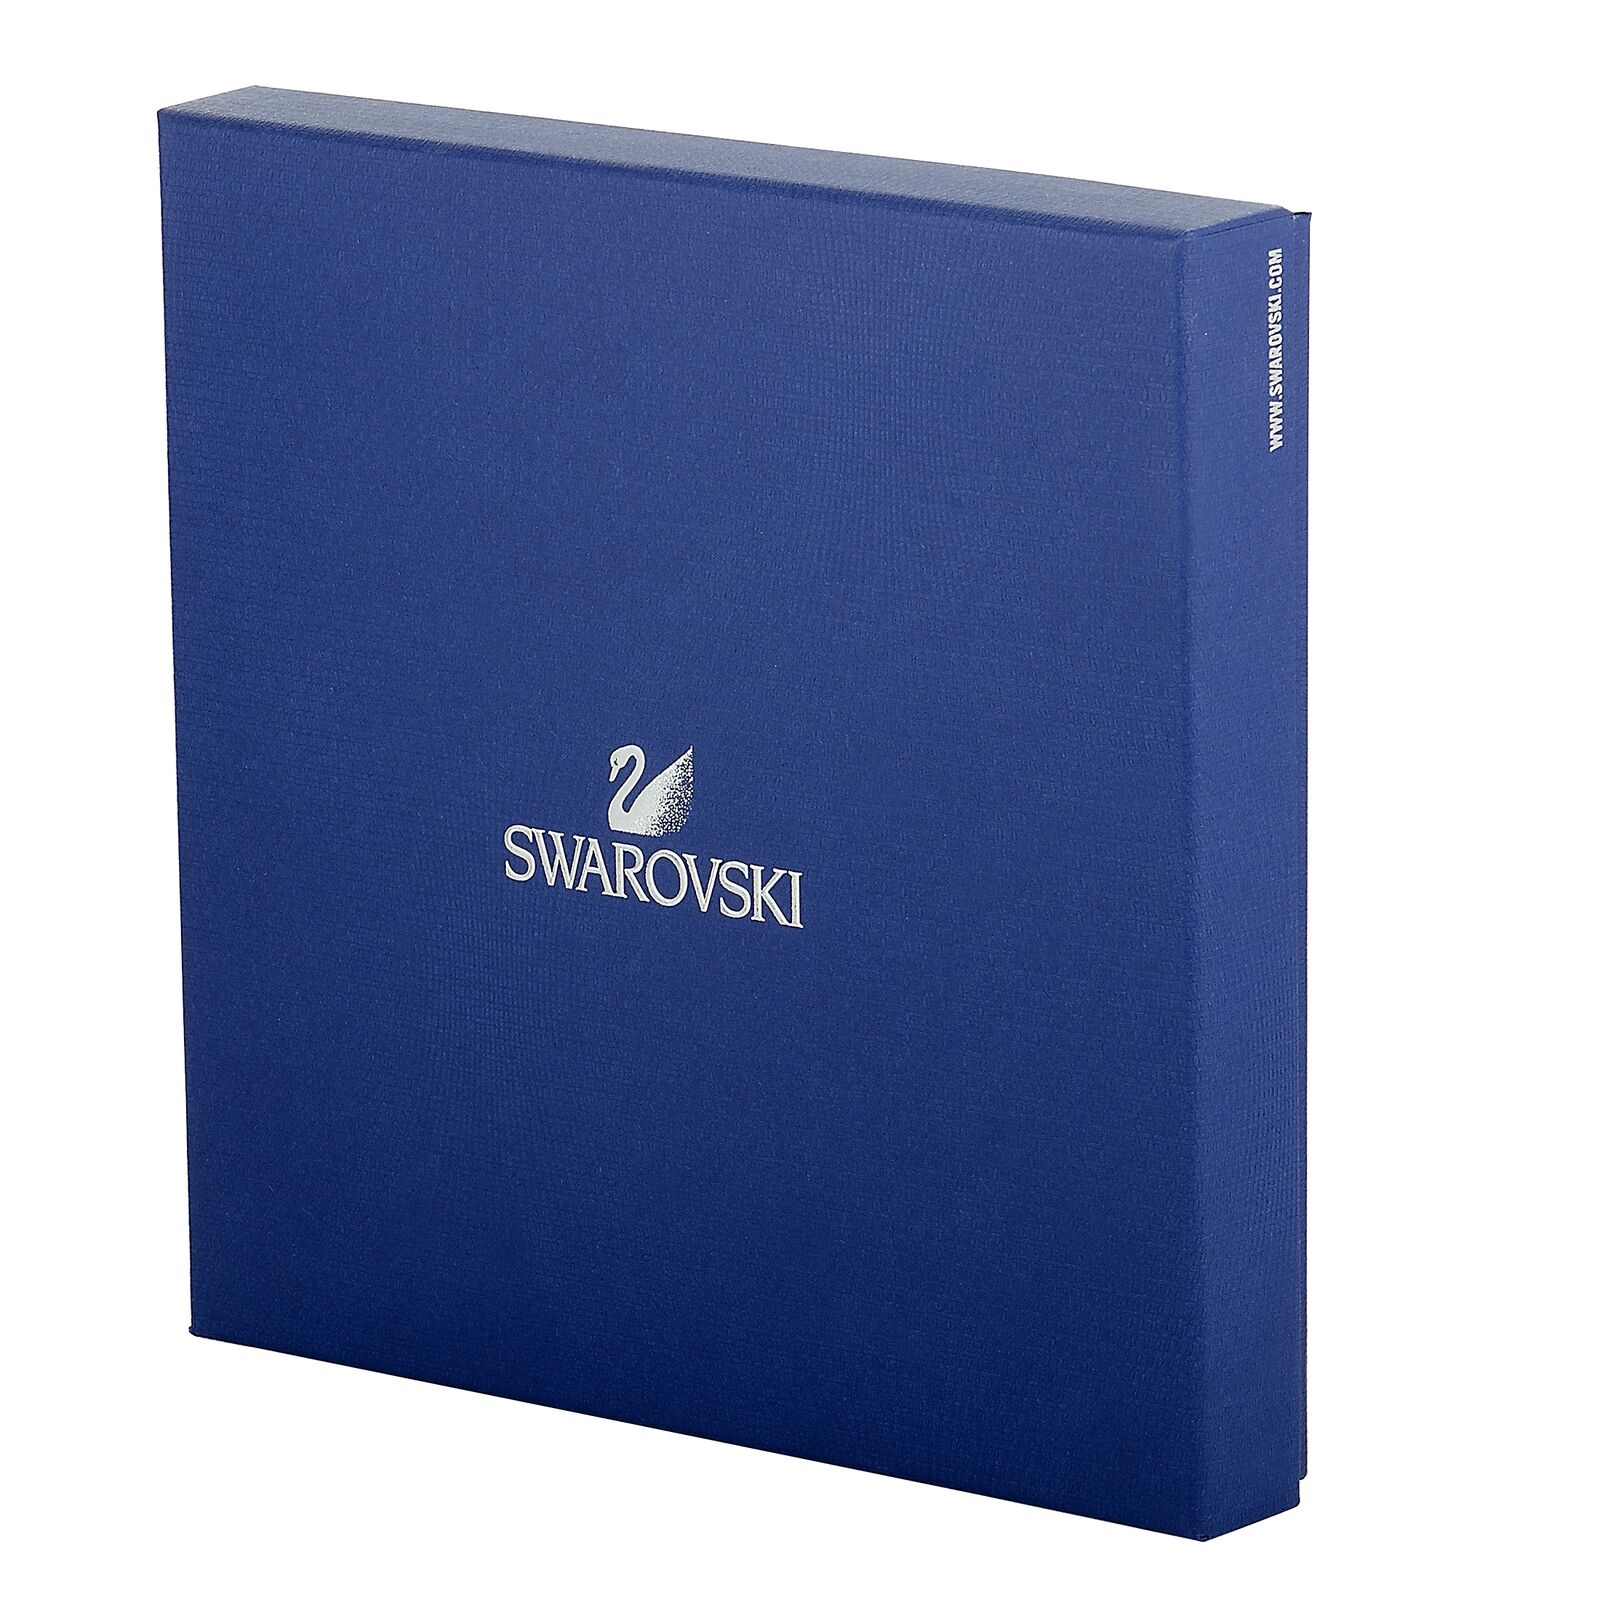 collier-swarovski-gipsy-metal-doré-cristal-bleu-blanc-packaging-5260592